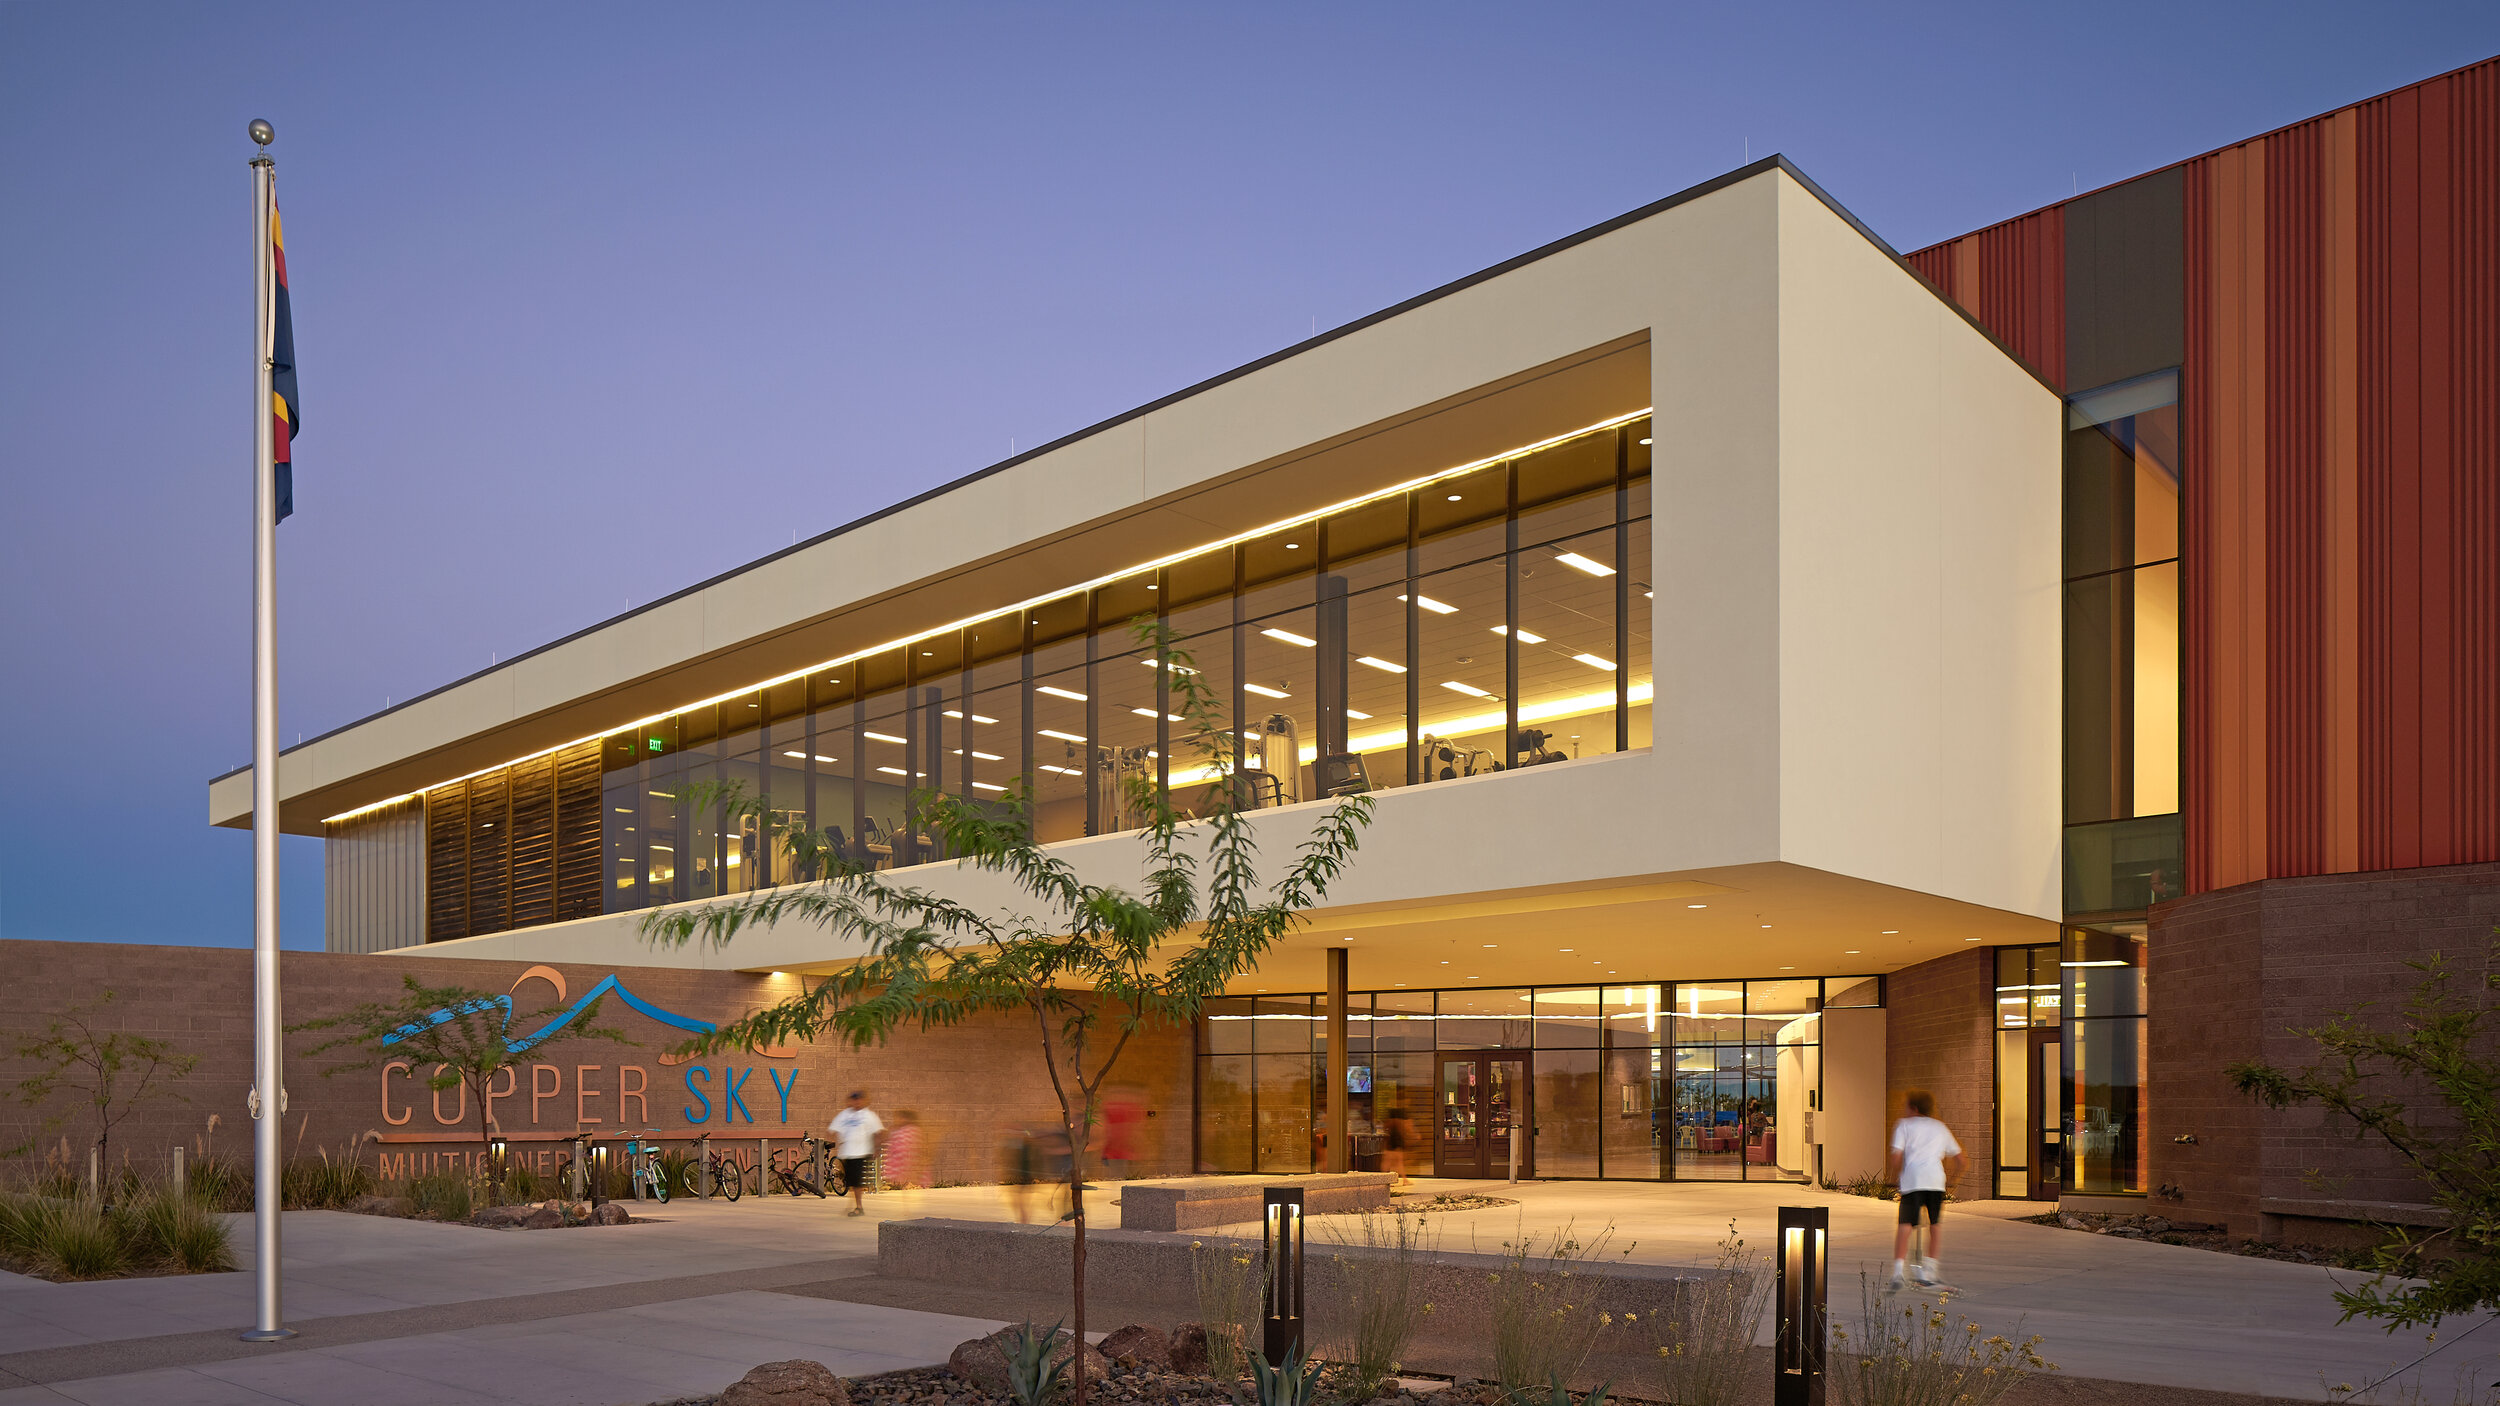 Maricopa Copper Sky Multigenerational Center + Aquatics Facility